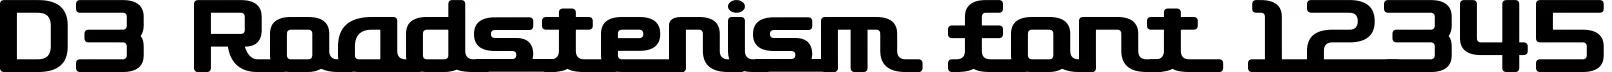 Dynamic D3 Roadsterism Font Preview https://safirsoft.com